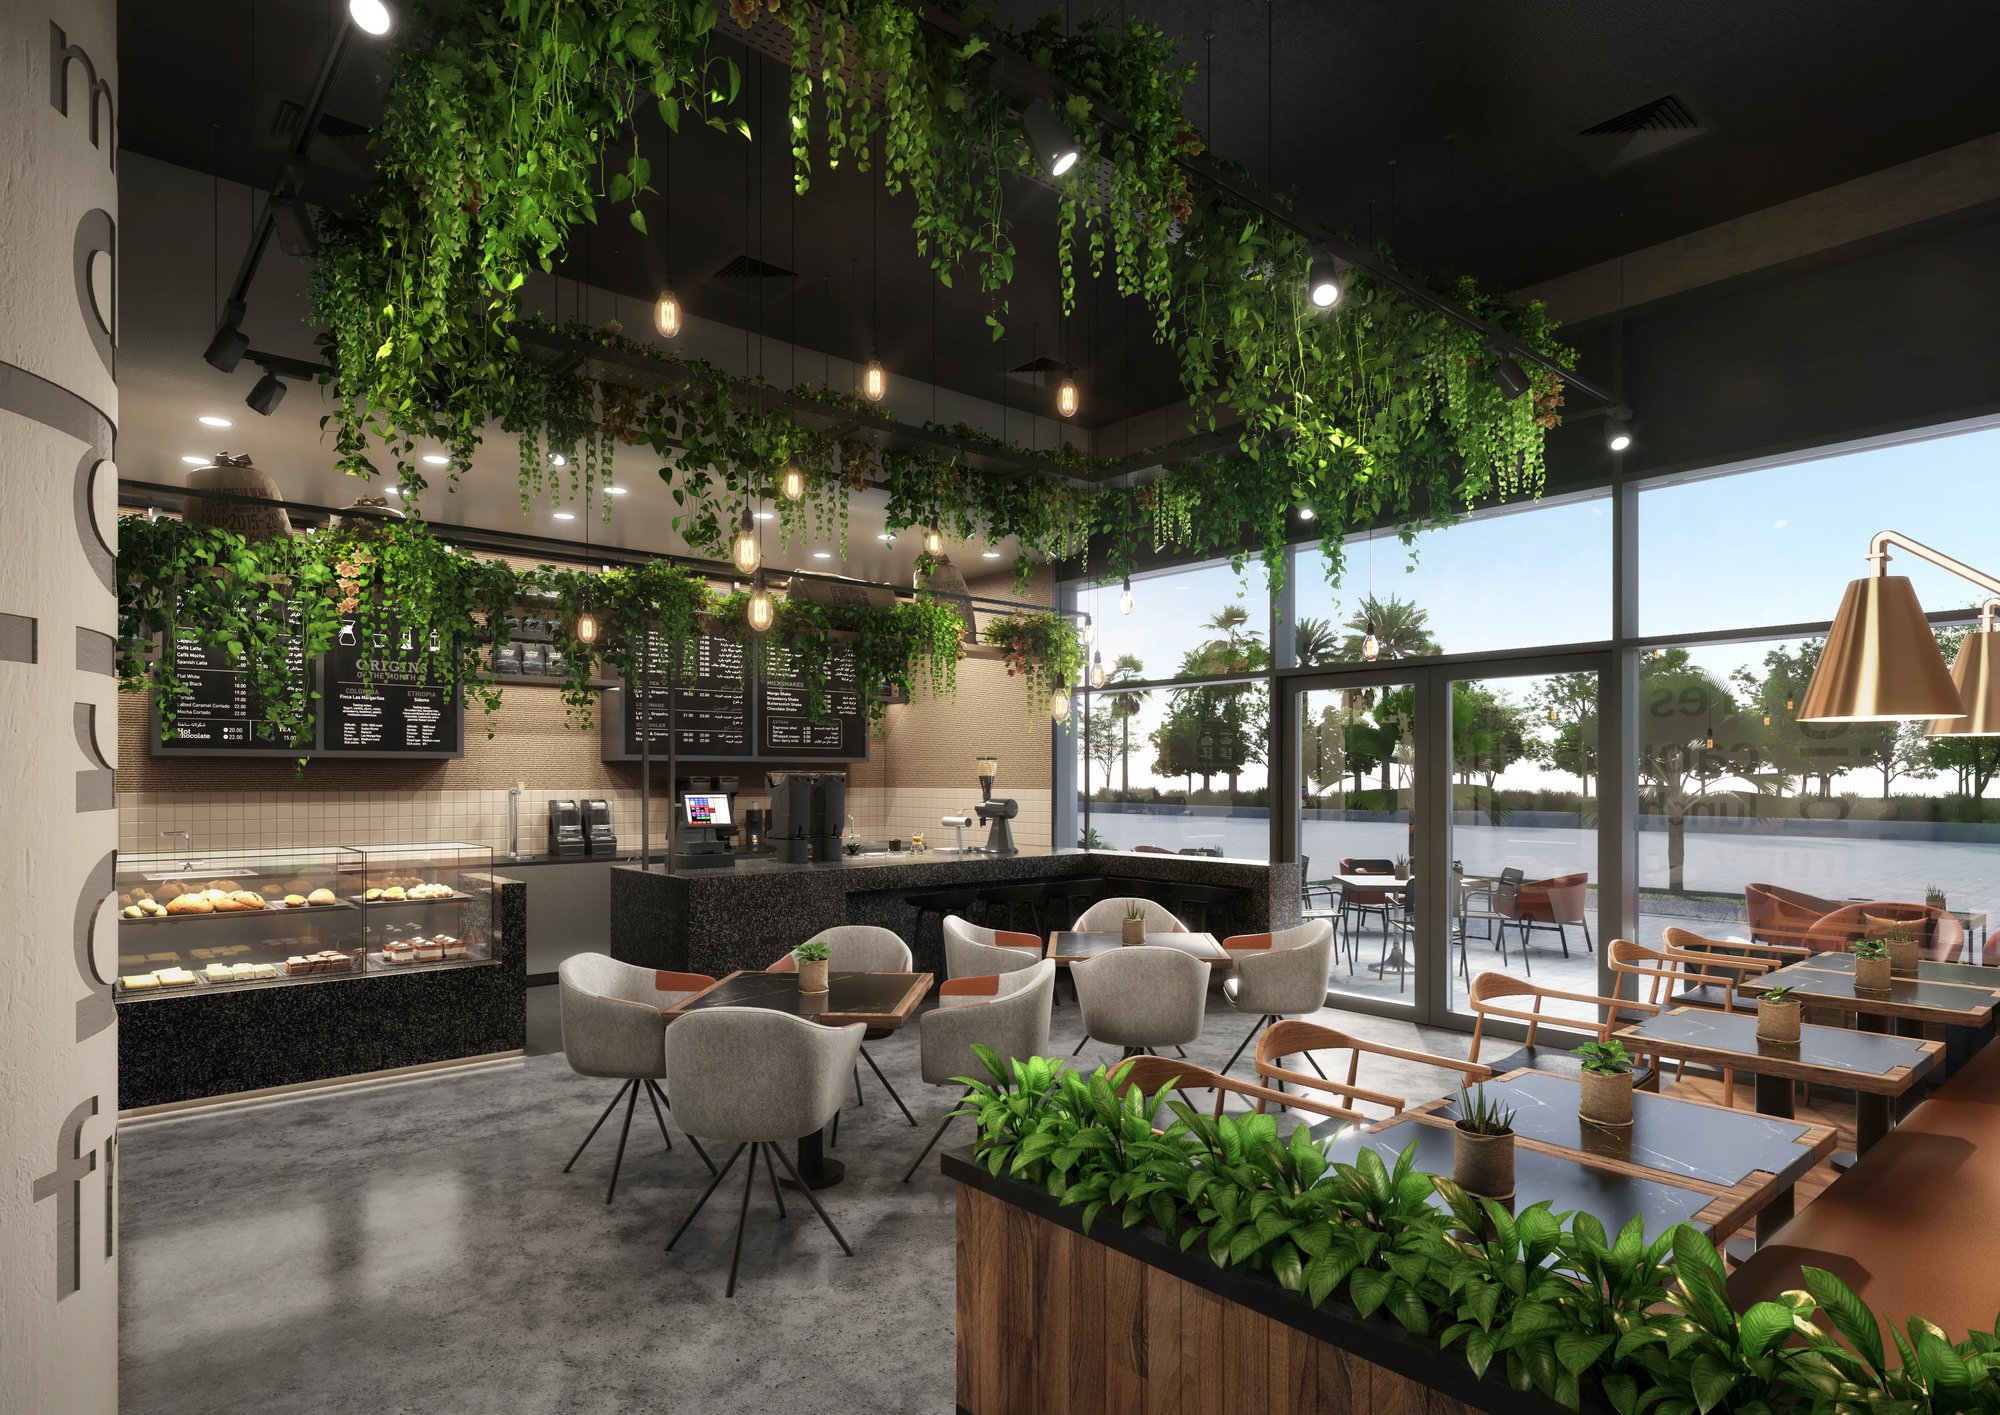 Coffee Planet Villanova Community Mall, Interior design CGI of the concept, hanging artificial plants with chalkboard menus